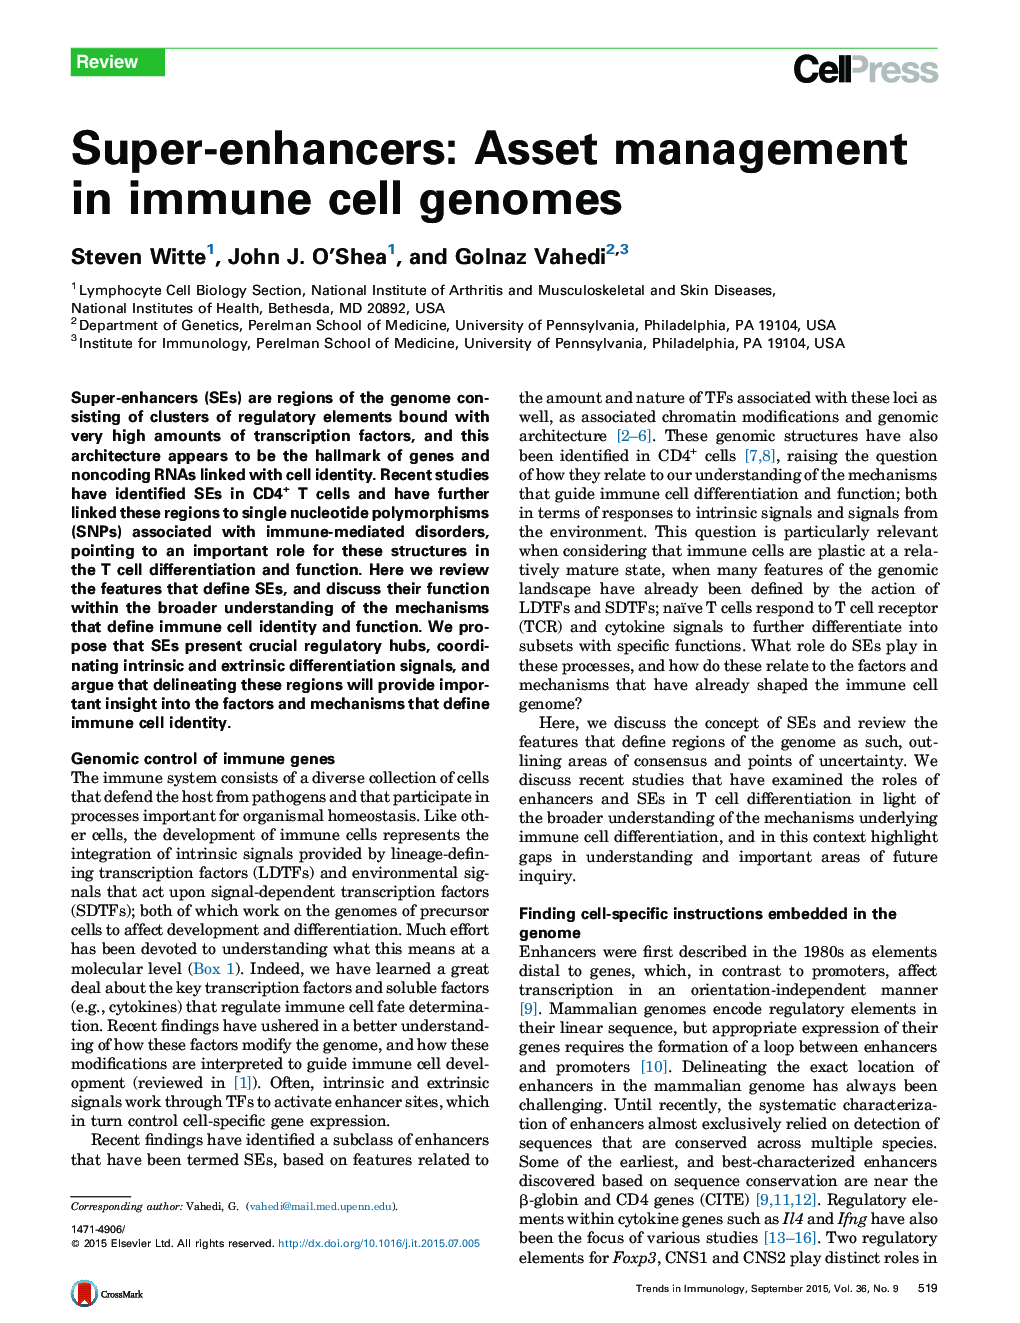 Super-enhancers: Asset management in immune cell genomes